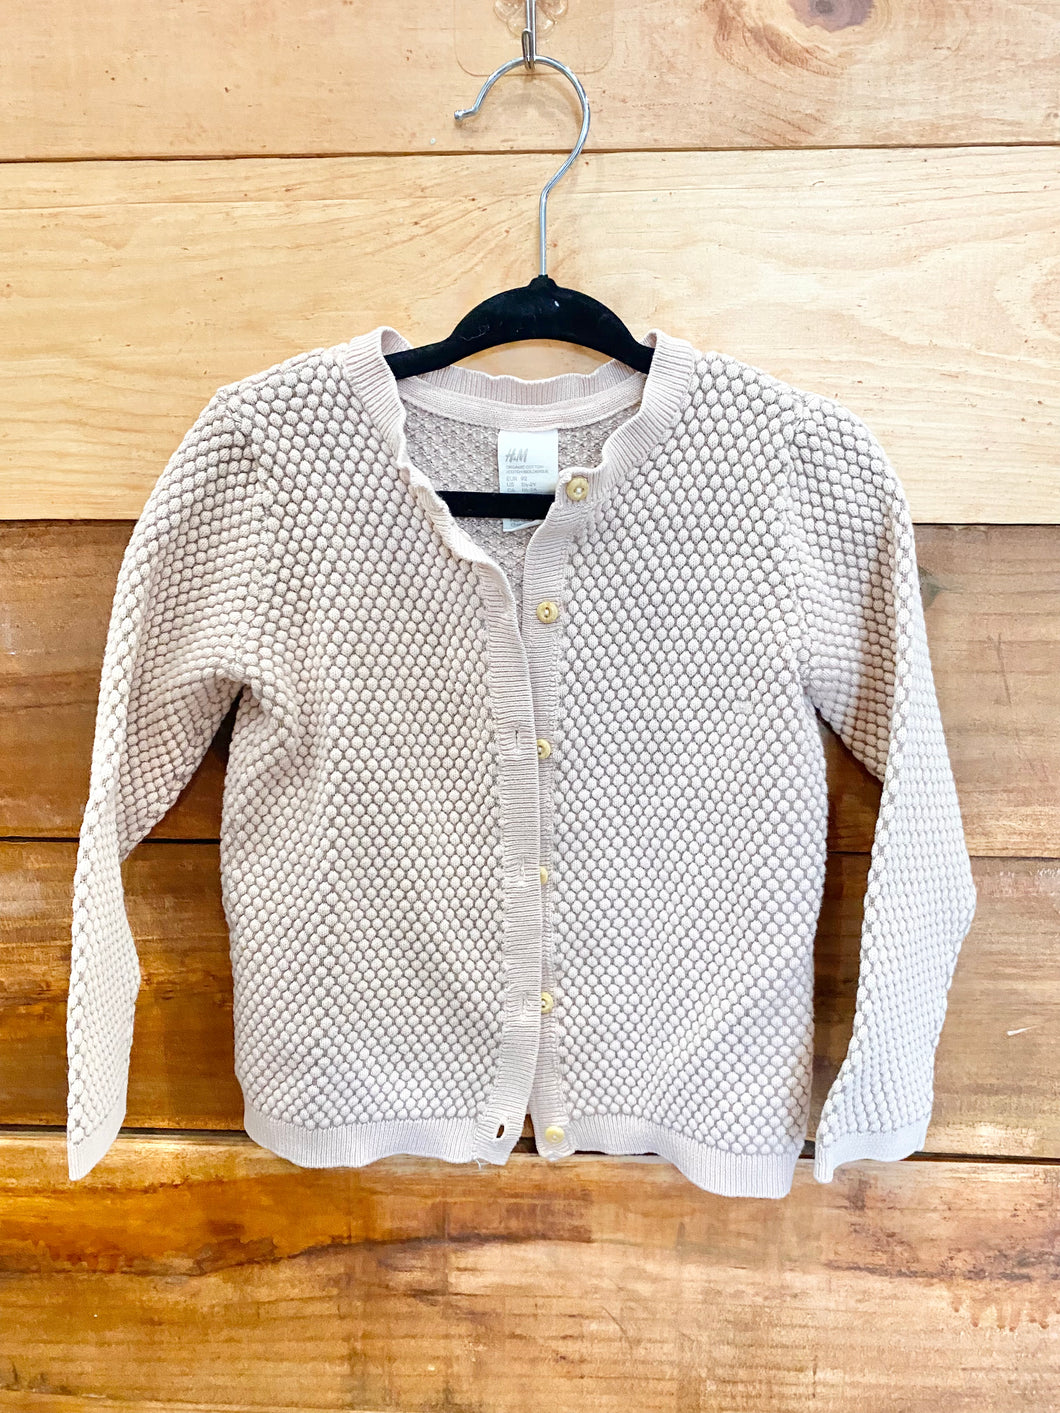 H&M Dusty Mauve Sweater Size 1.5-2Y